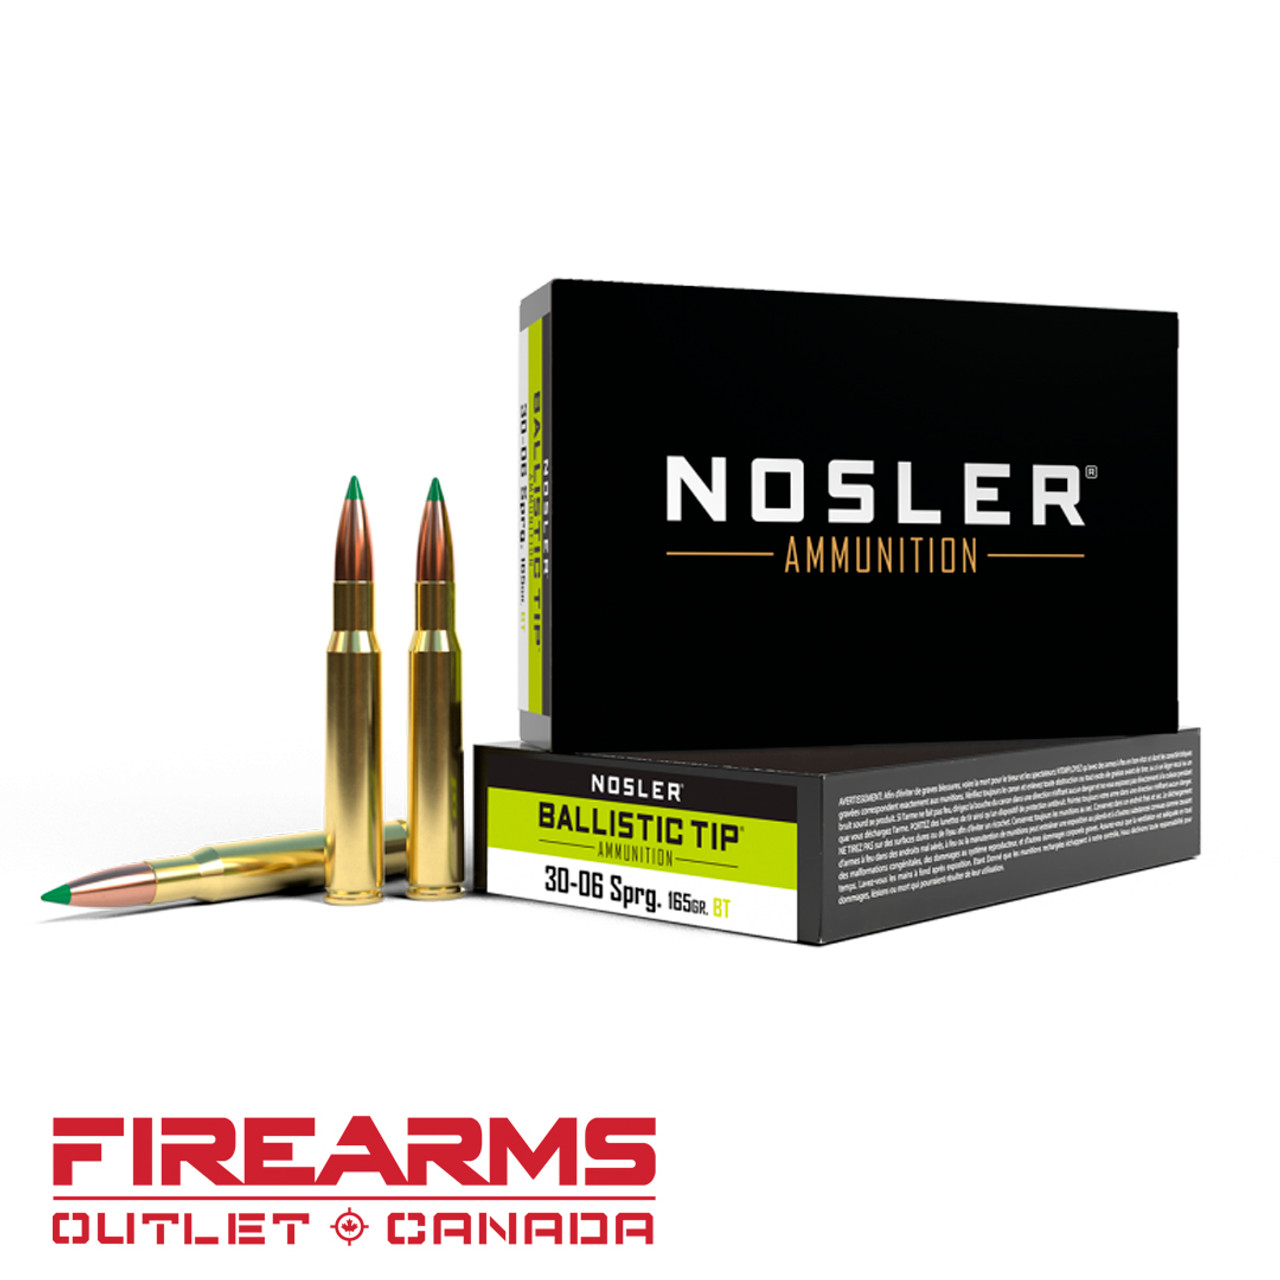 Nosler Ammunition - .30-06 Springfield, 165gr, BT, Box of 20 [40043]